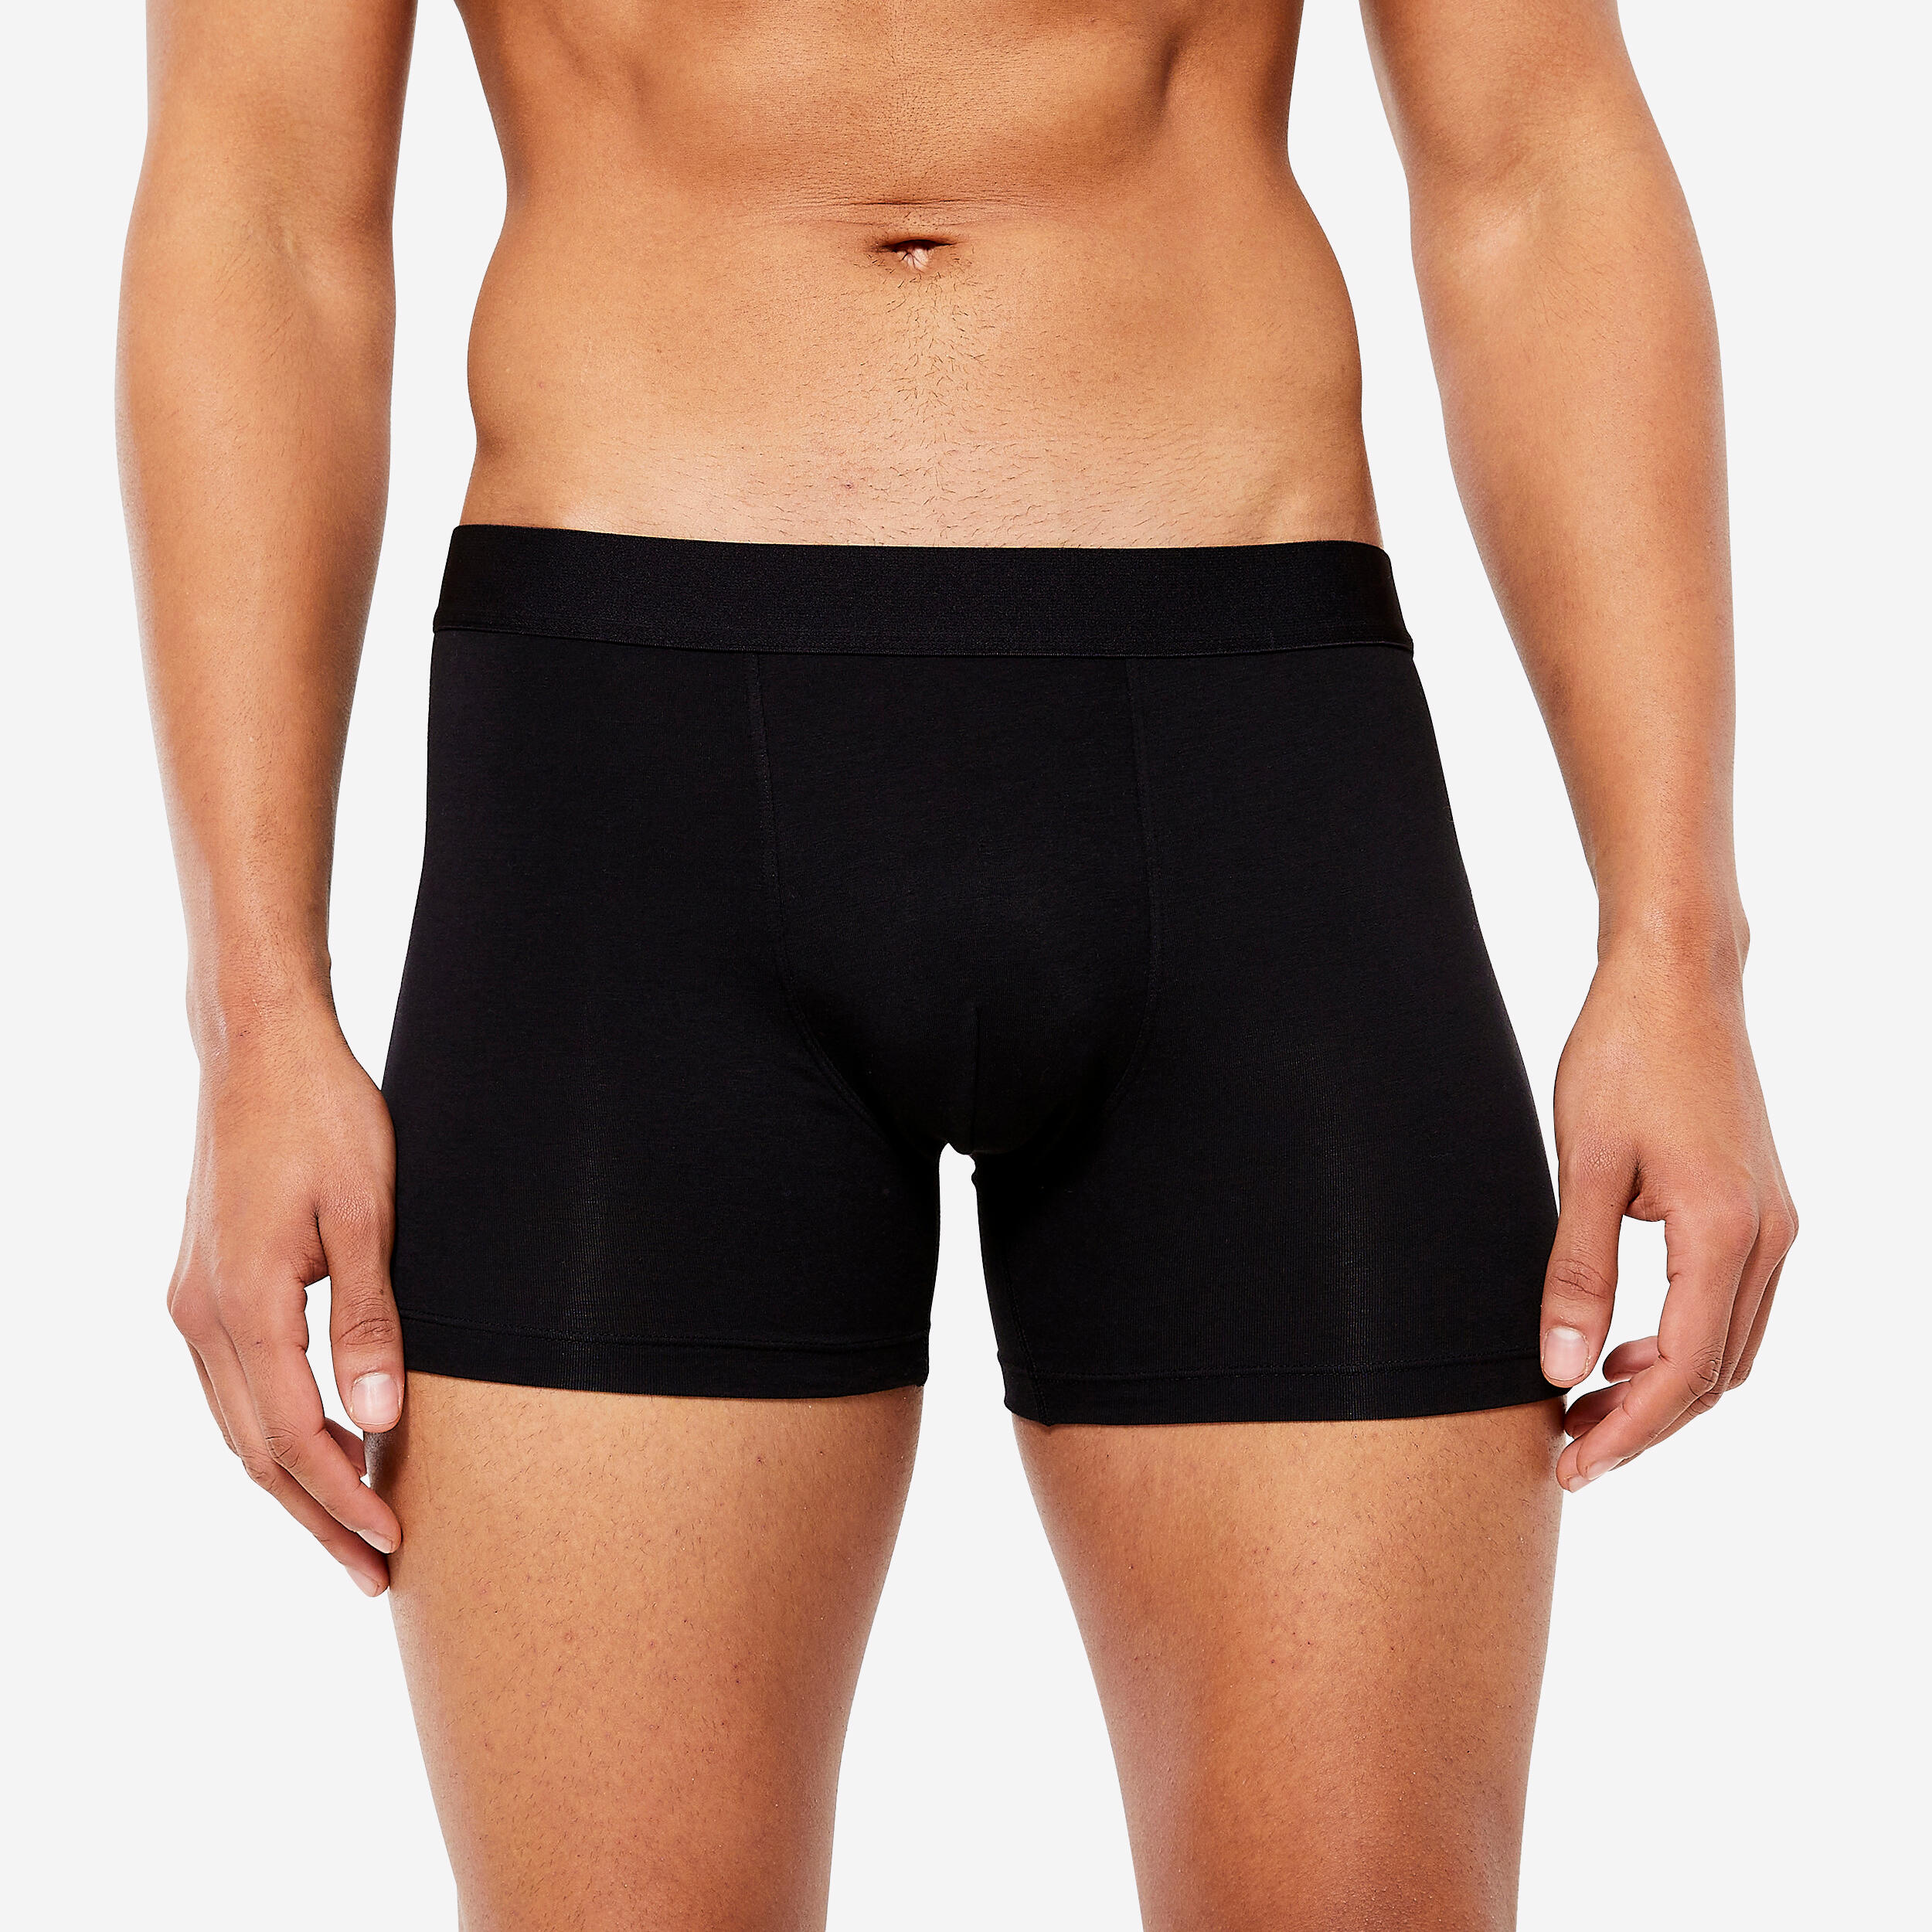 Men’s Fitness Boxer Shorts - 3-Pack - black, Dark grey, Asphalt blue ...